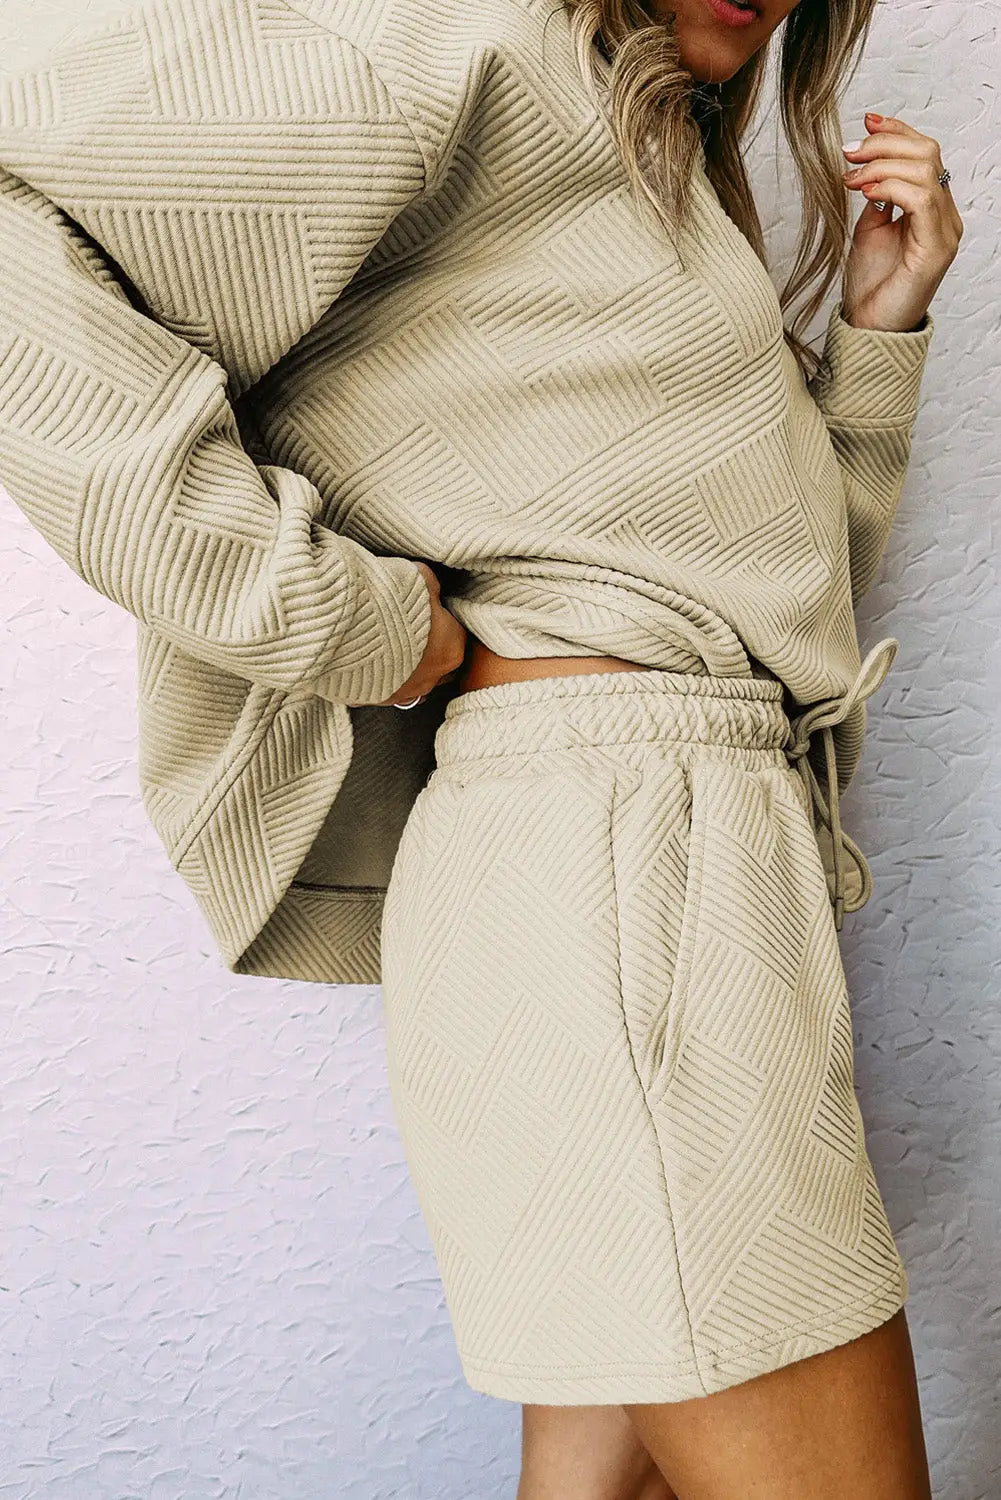 Apricot textured long sleeve top and drawstring shorts set - loungewear